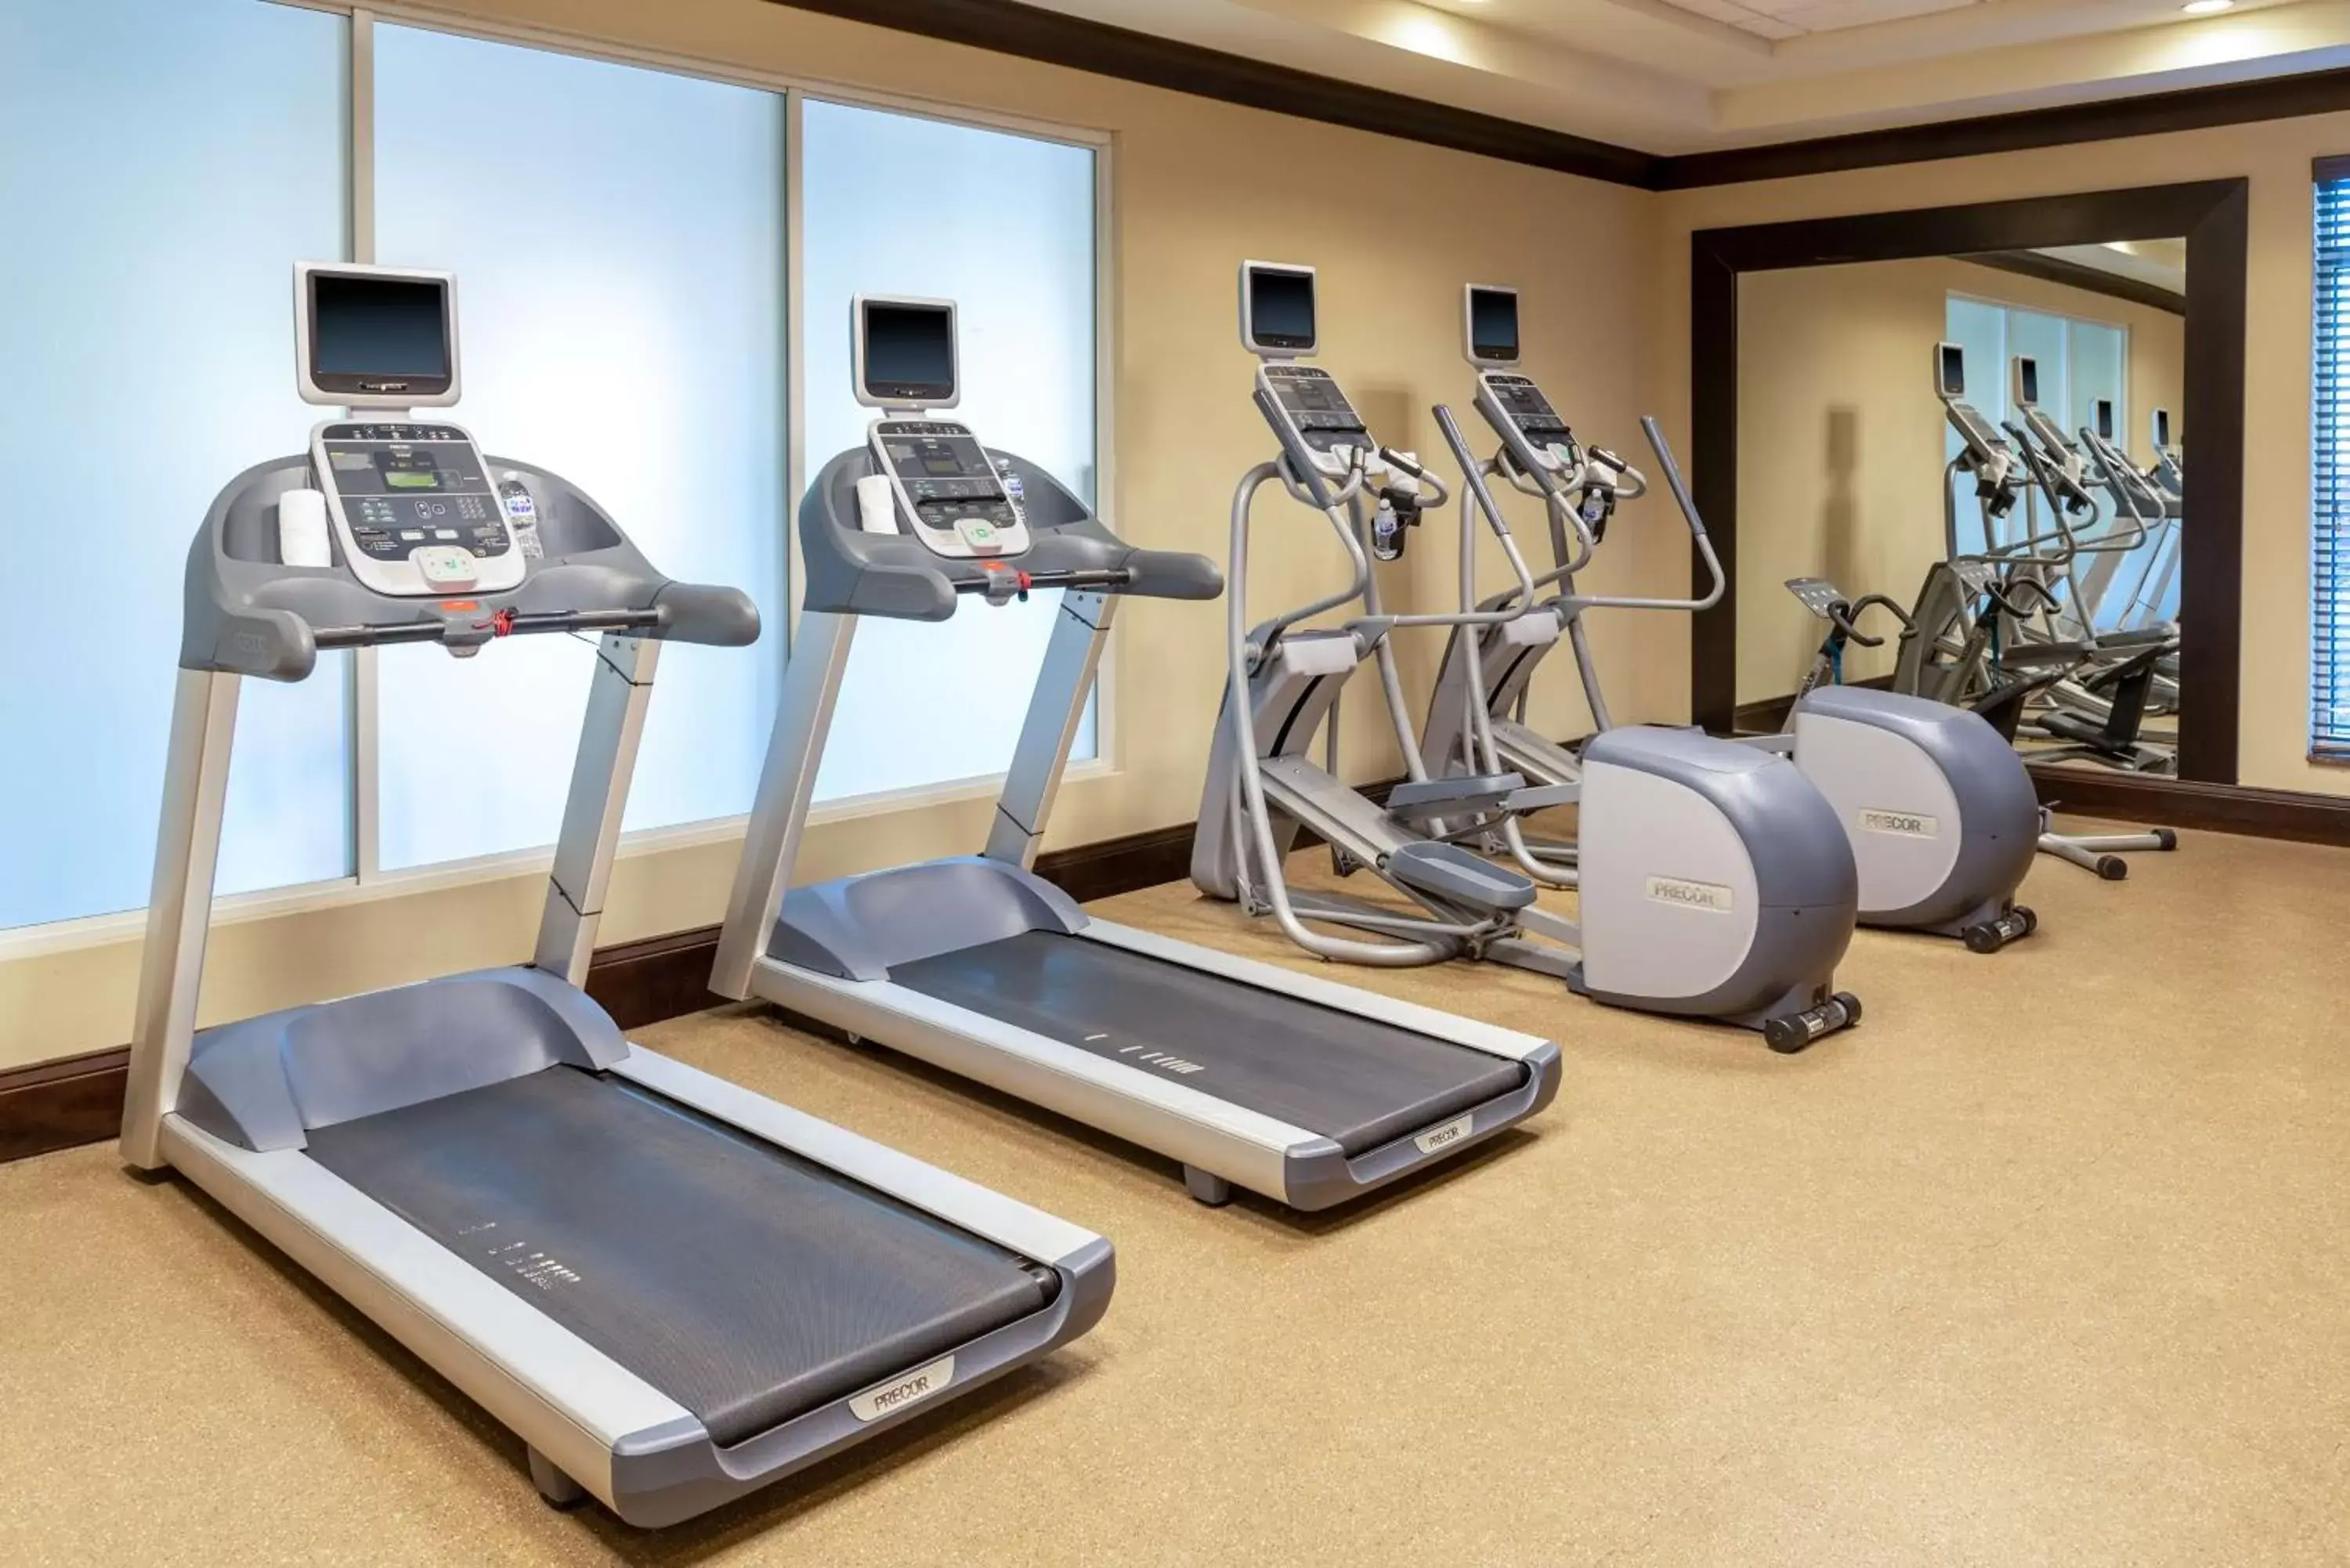 Fitness centre/facilities, Fitness Center/Facilities in Hilton Garden Inn North Little Rock